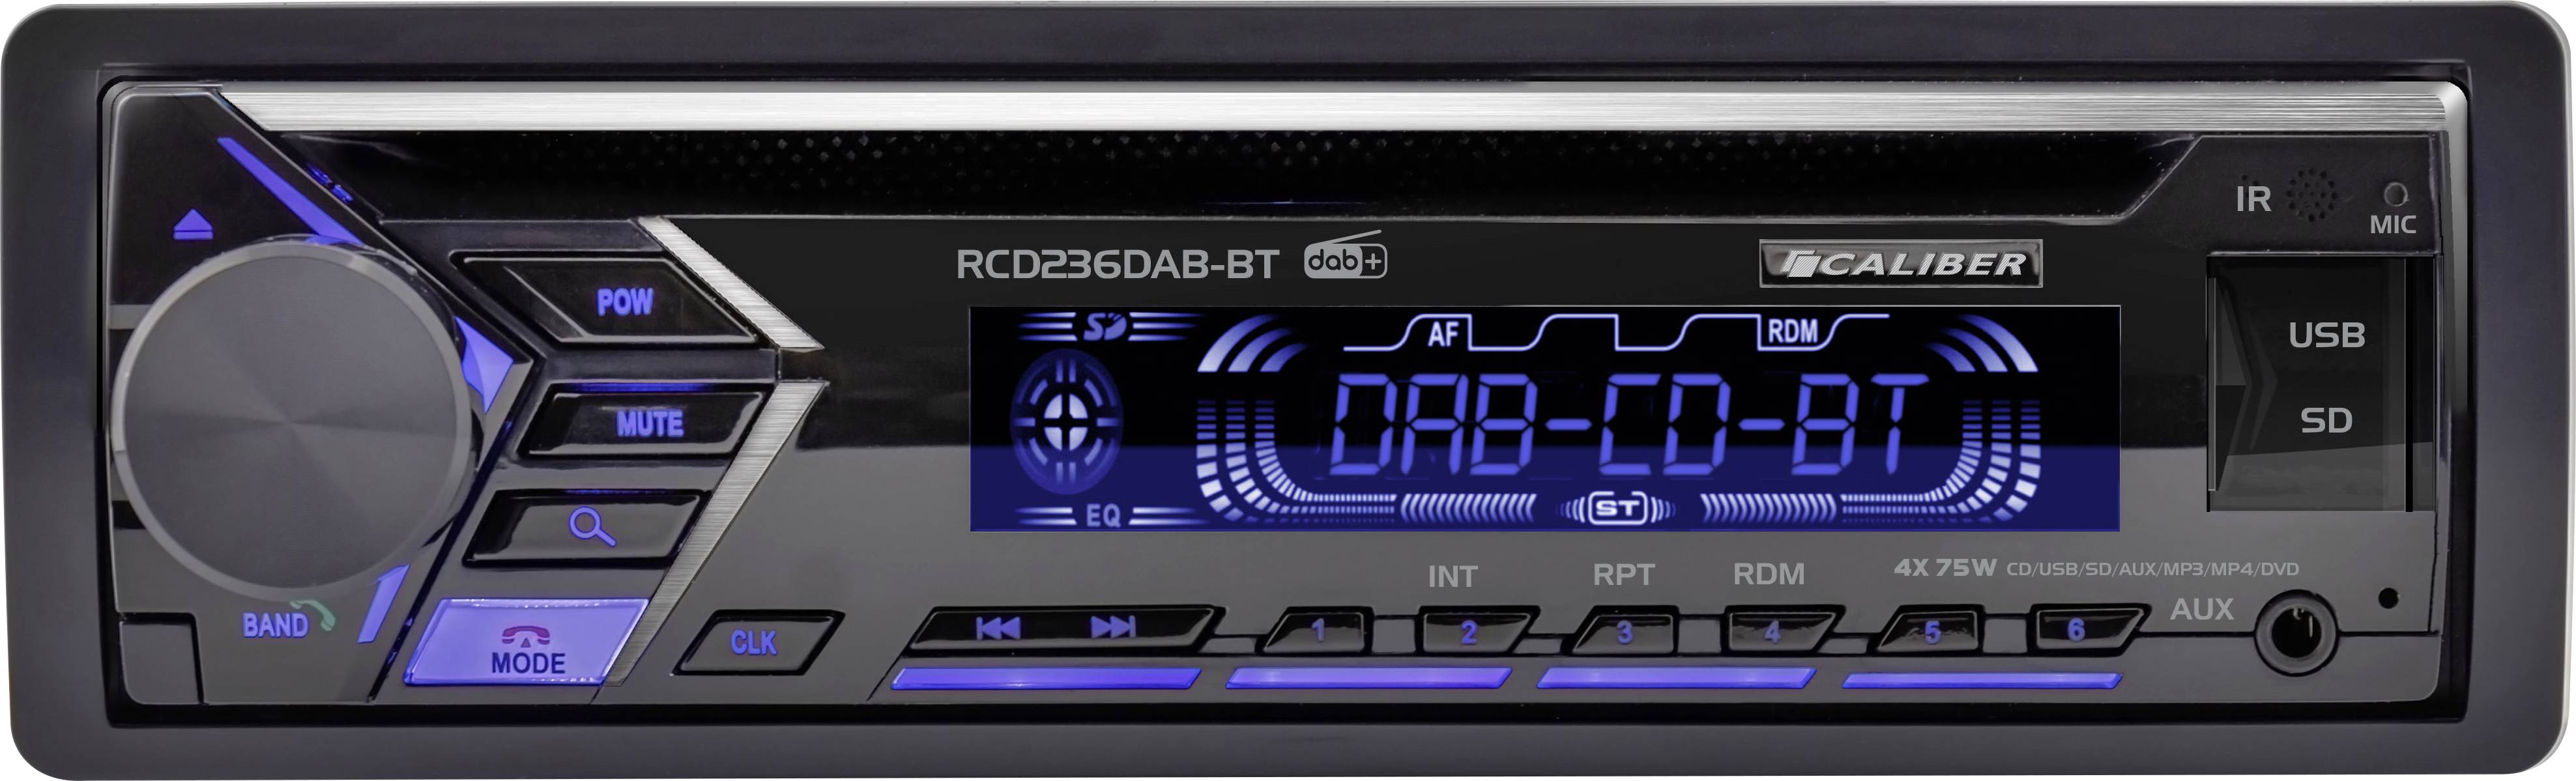 Caliber RCD120DAB-BT - Autoradio - Garantie 3 ans LDLC